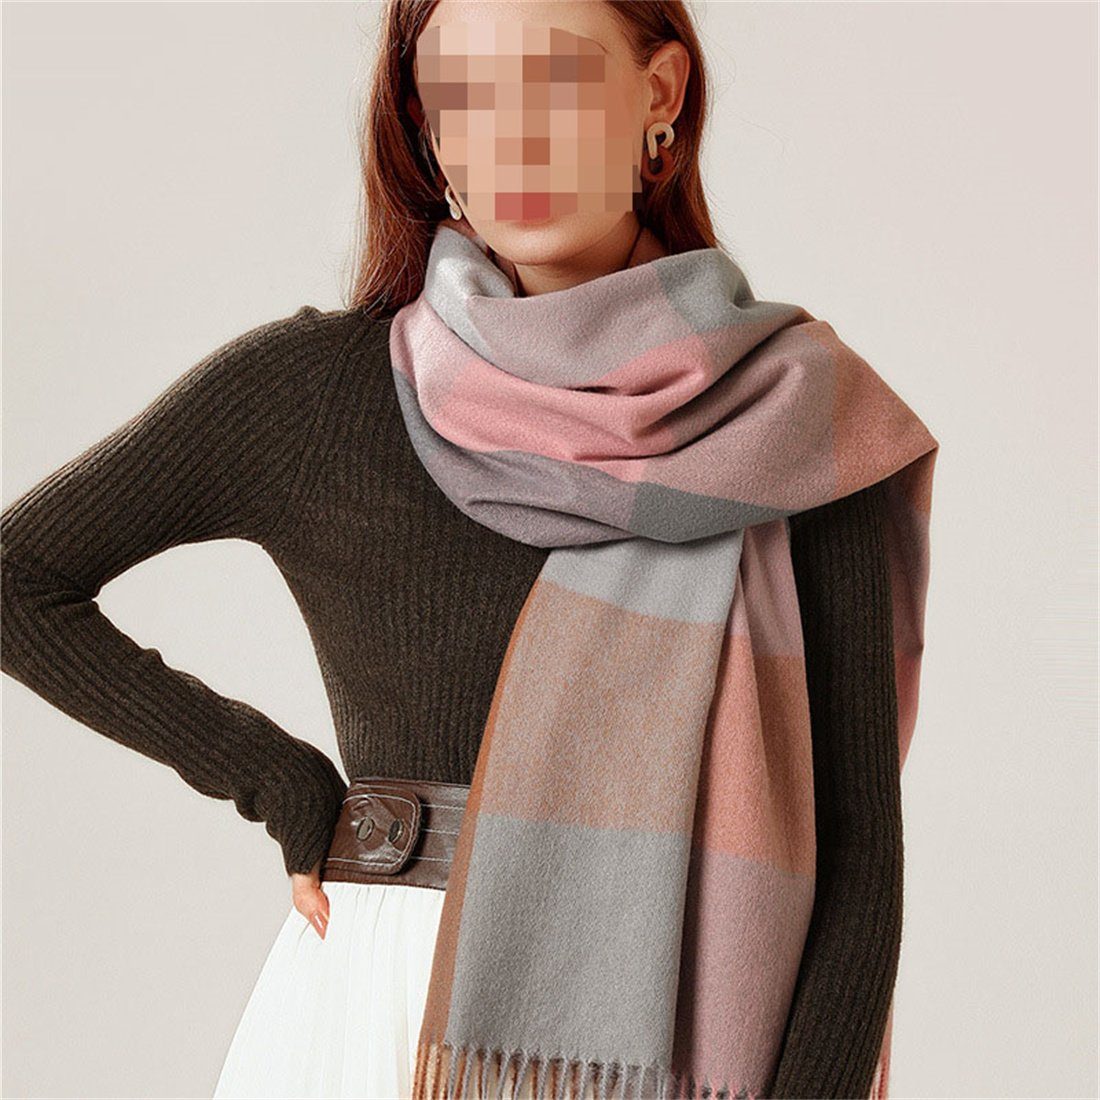 DÖRÖY Modeschal Damen Schal Winter Schal, khaki Vintage quadratischen Warm gestreiften